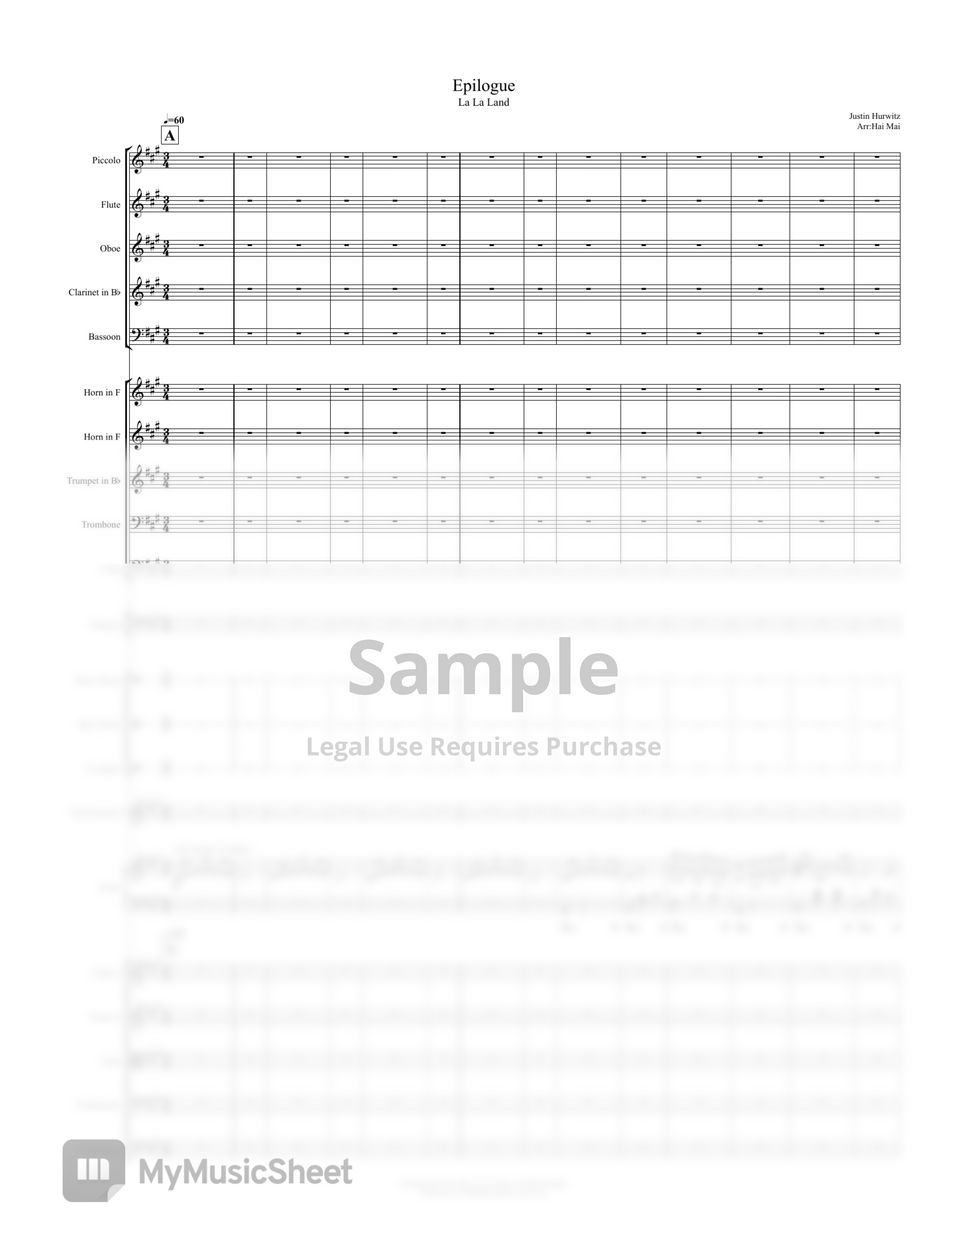 Justin Hurwitz - Epilogue(La La Land) for Orchestra - Score and Part by Hai Mai